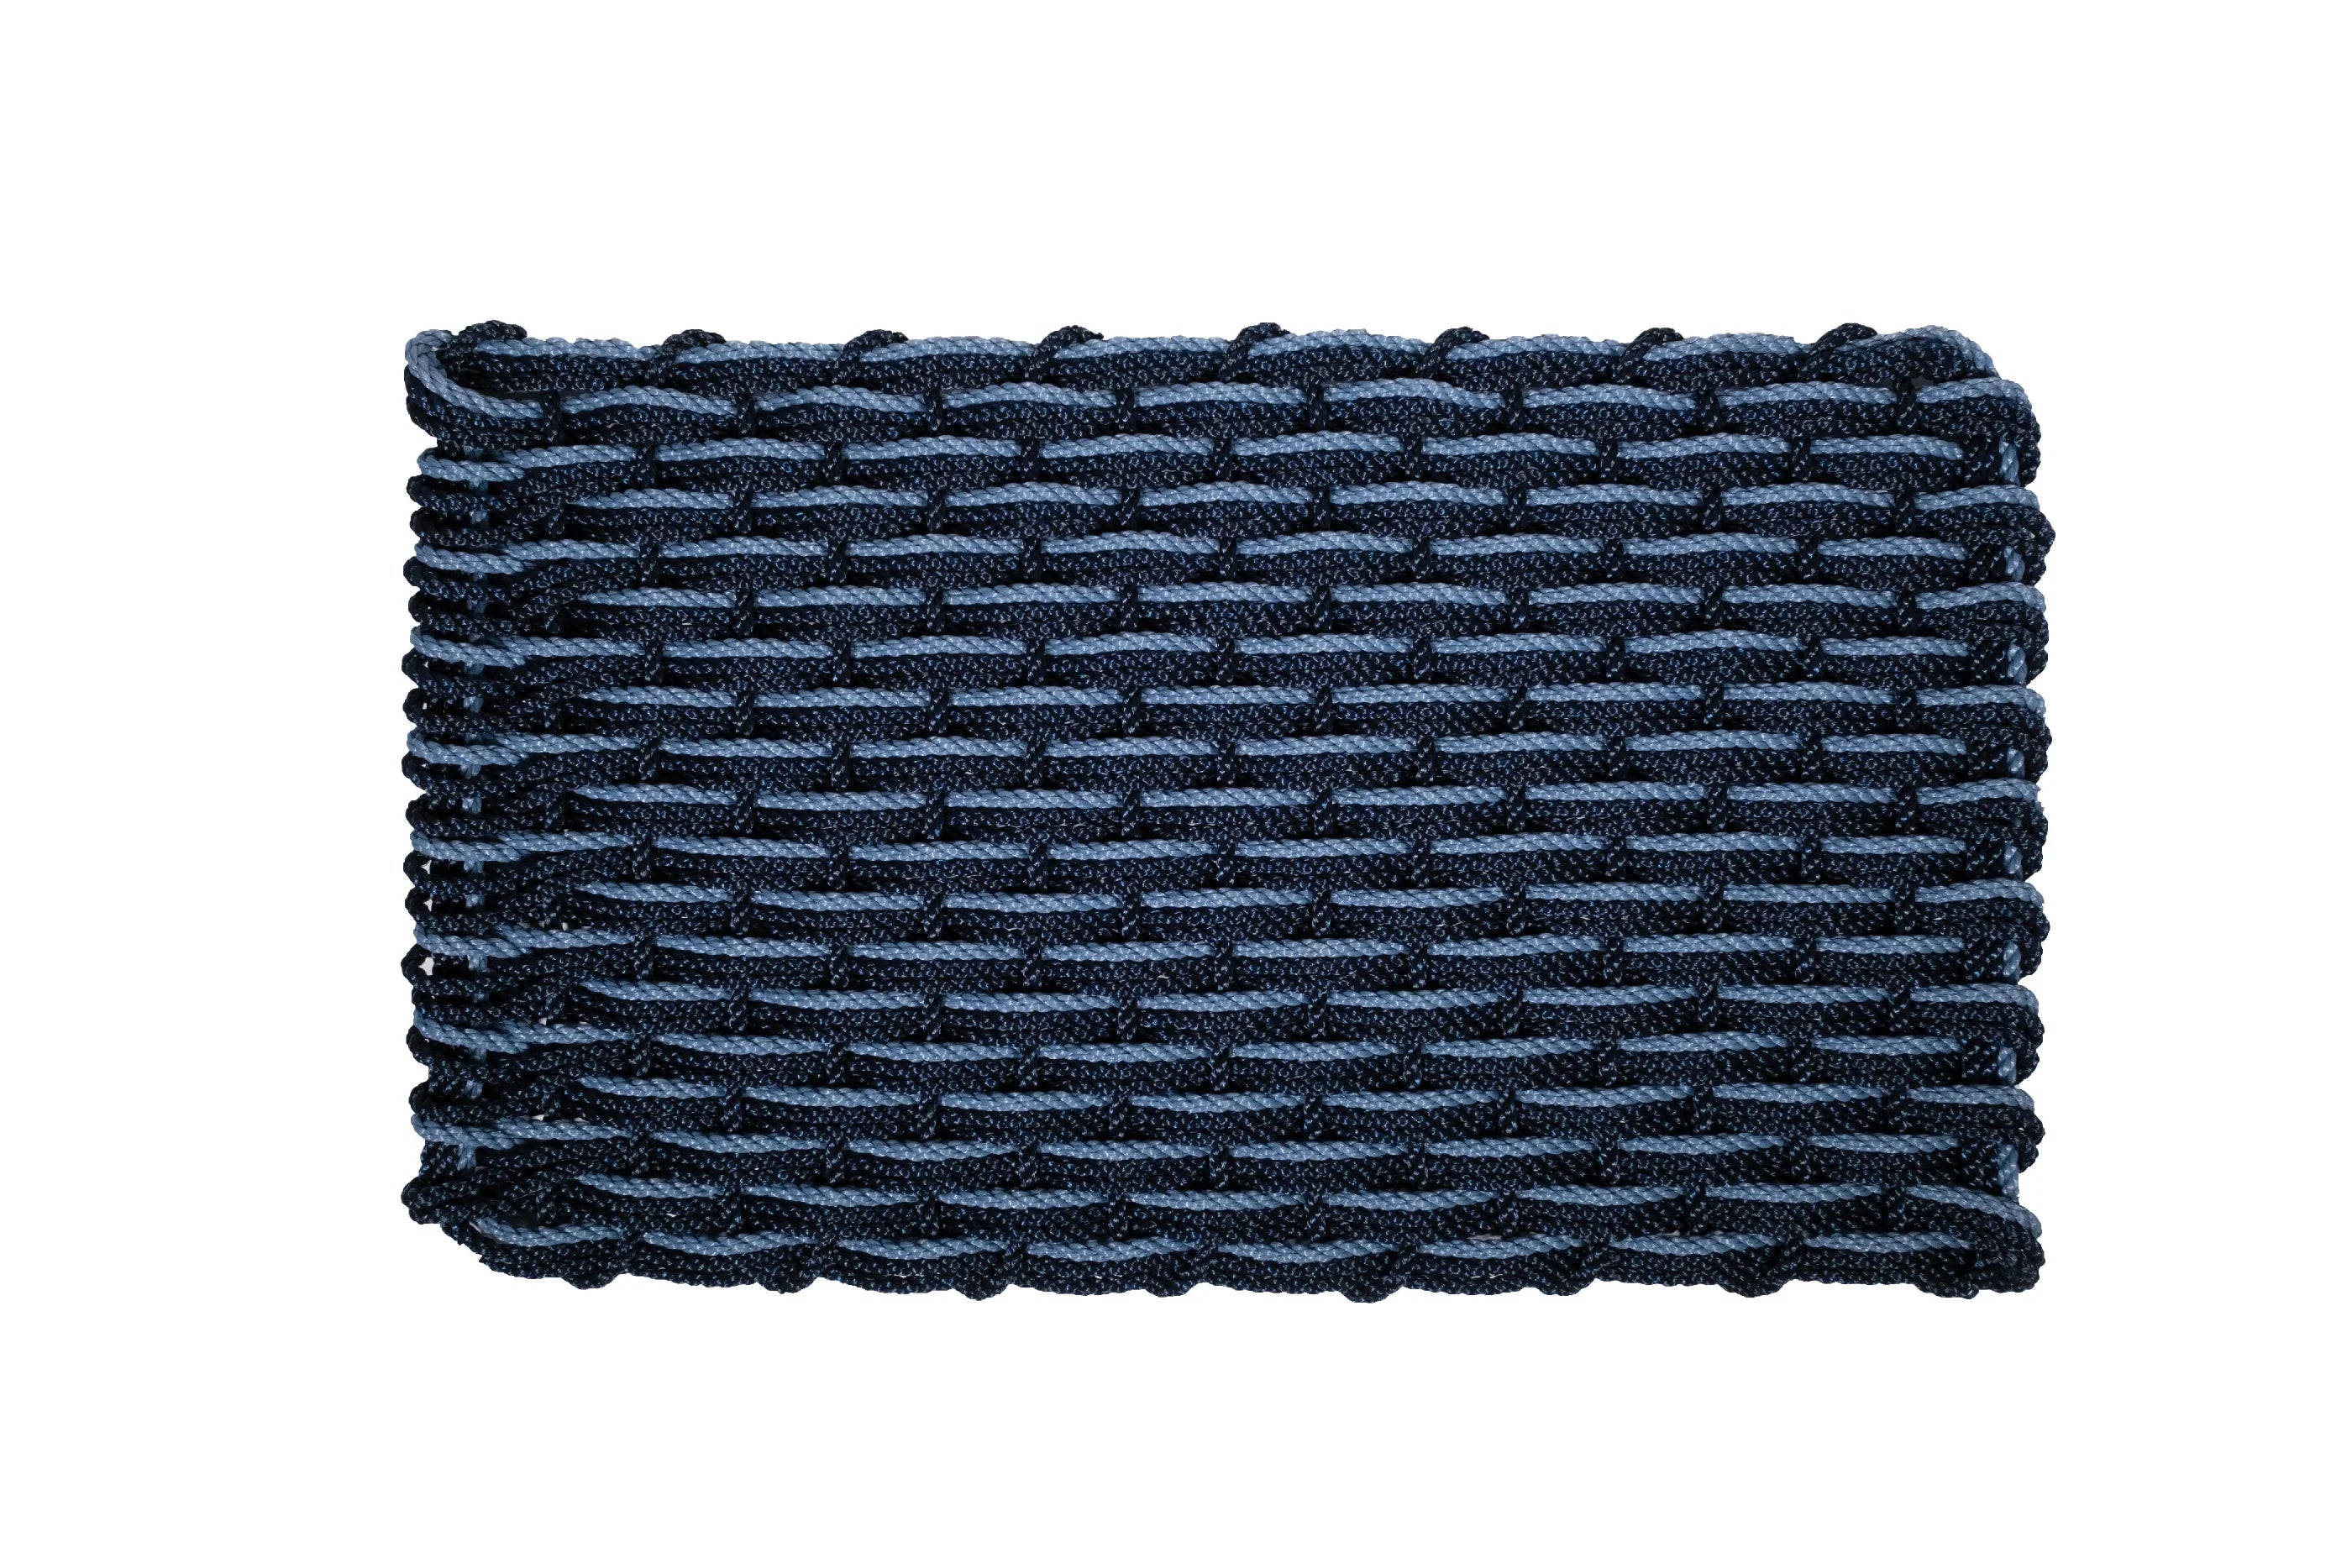 Large Doormat - Navy/Navy/Glacier Bay Triple Weave